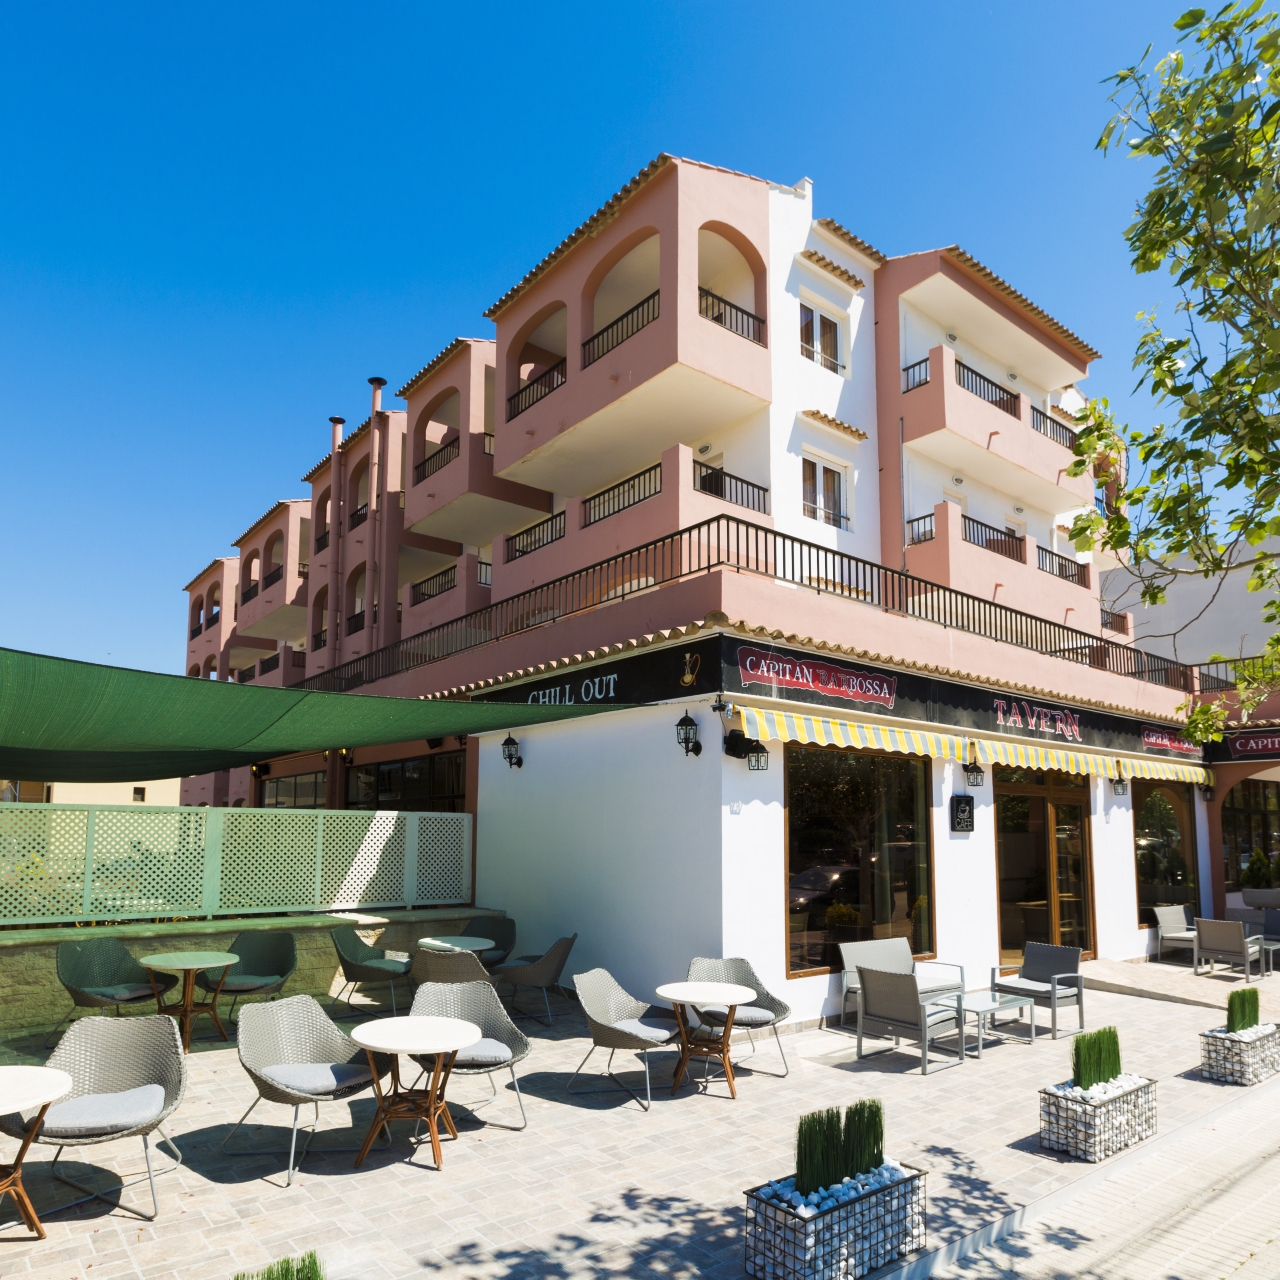 Hotel Santa Ponsa Pins en Santa Ponça, Calvià en HRS con servicios gratuitos